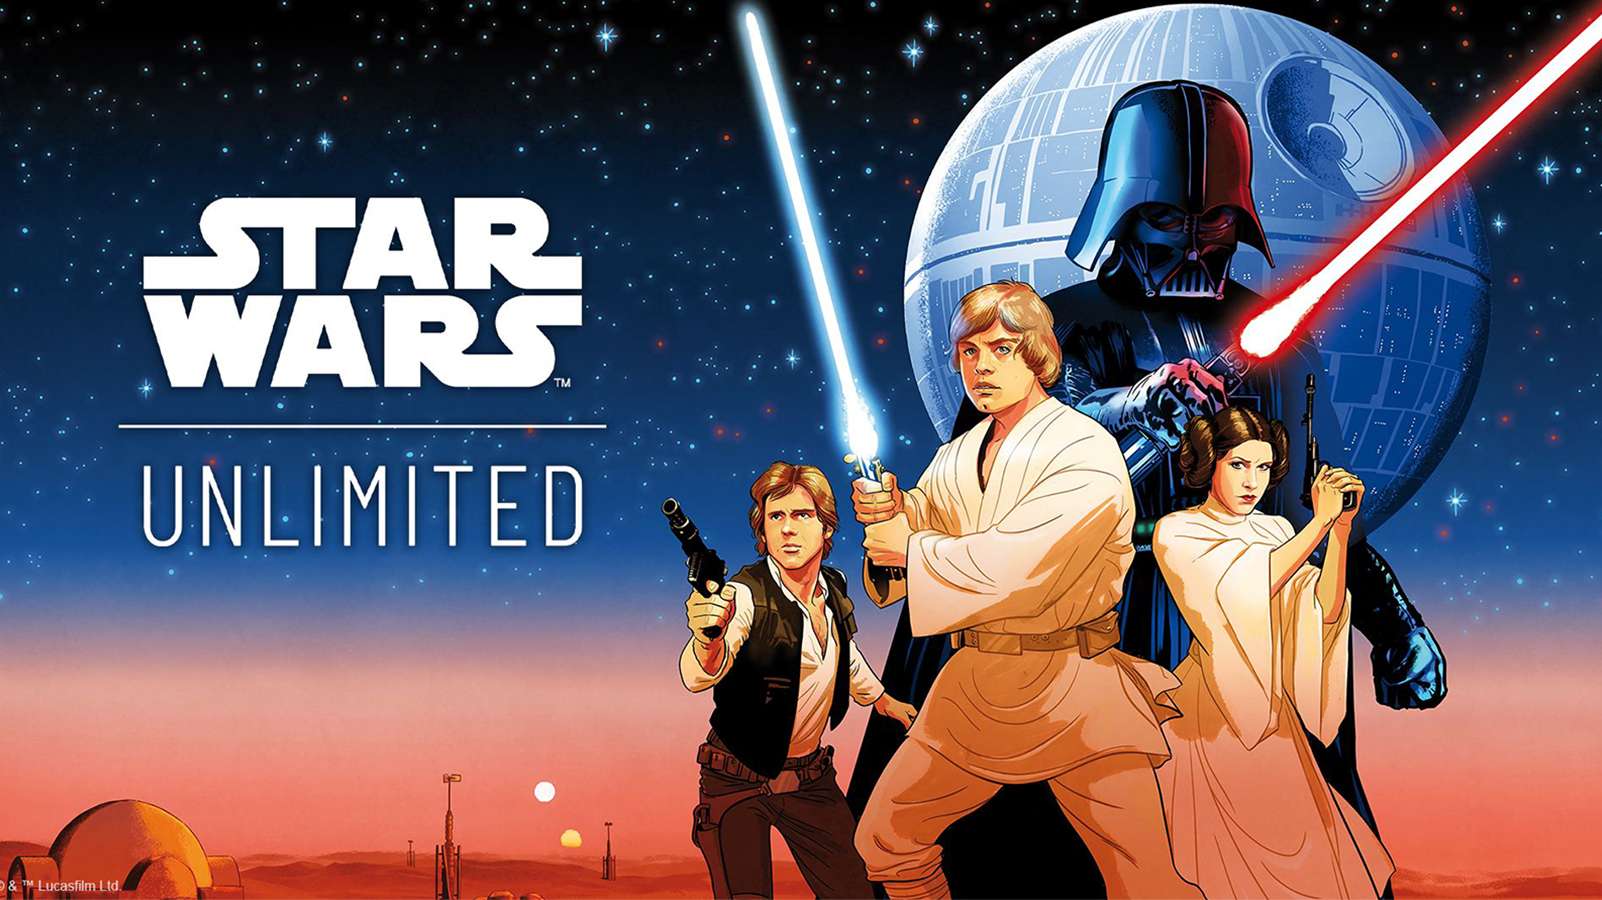 Star Wars Unlimited incelemesi